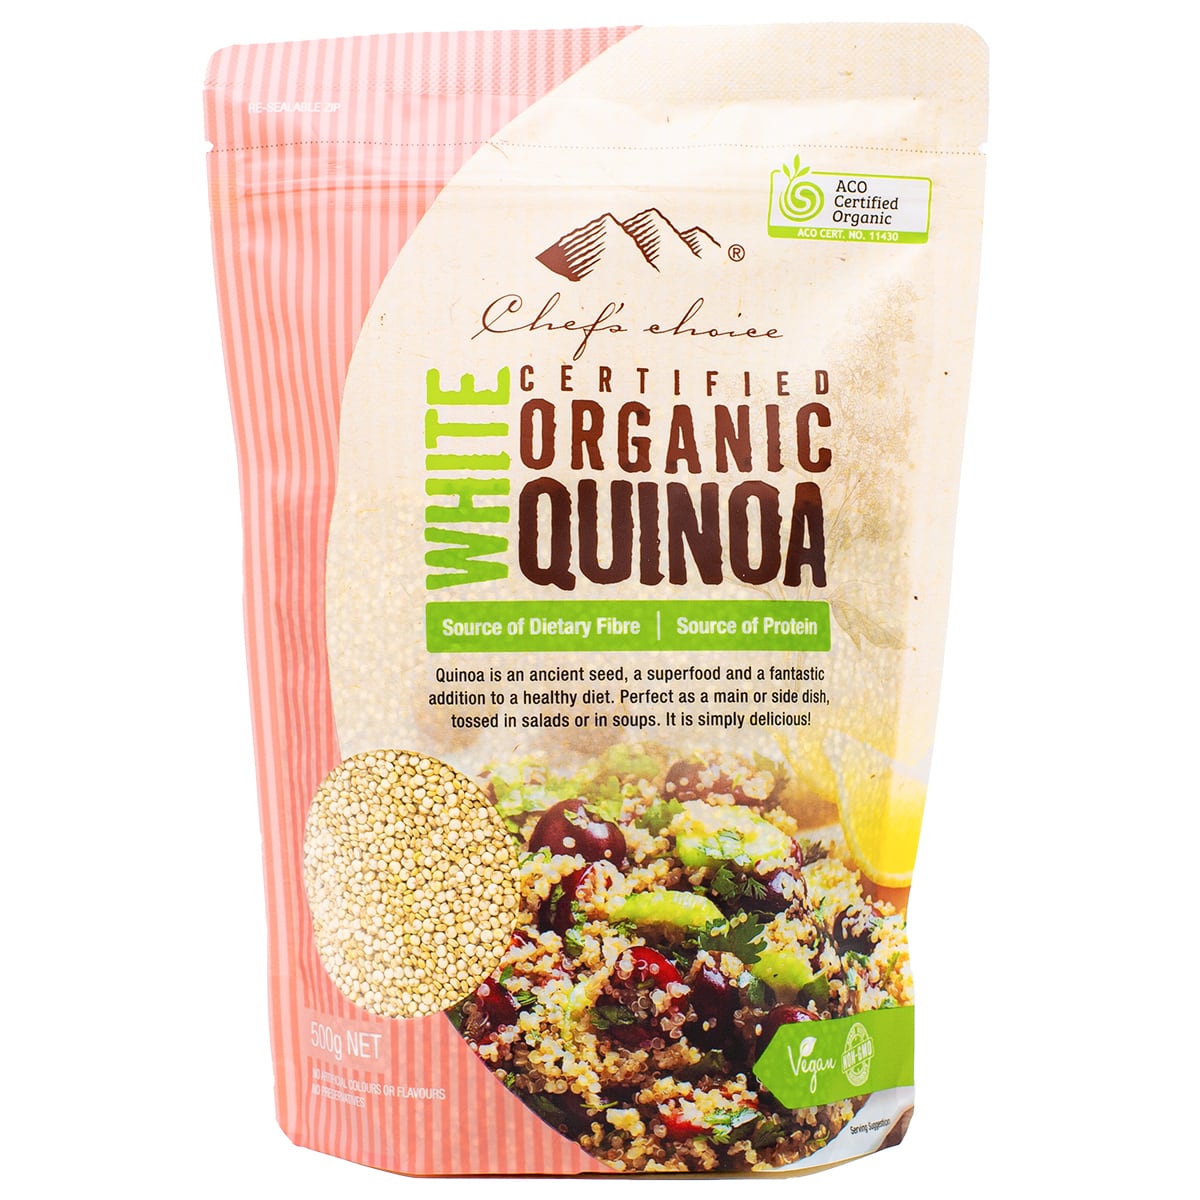 Derfor Delegeret Vej シェフズチョイス オーガニック キヌア 500g Organic Mix Quinoa 有機キヌア | Chef's Choice Japan  ｜シェフズチョイスジャパン